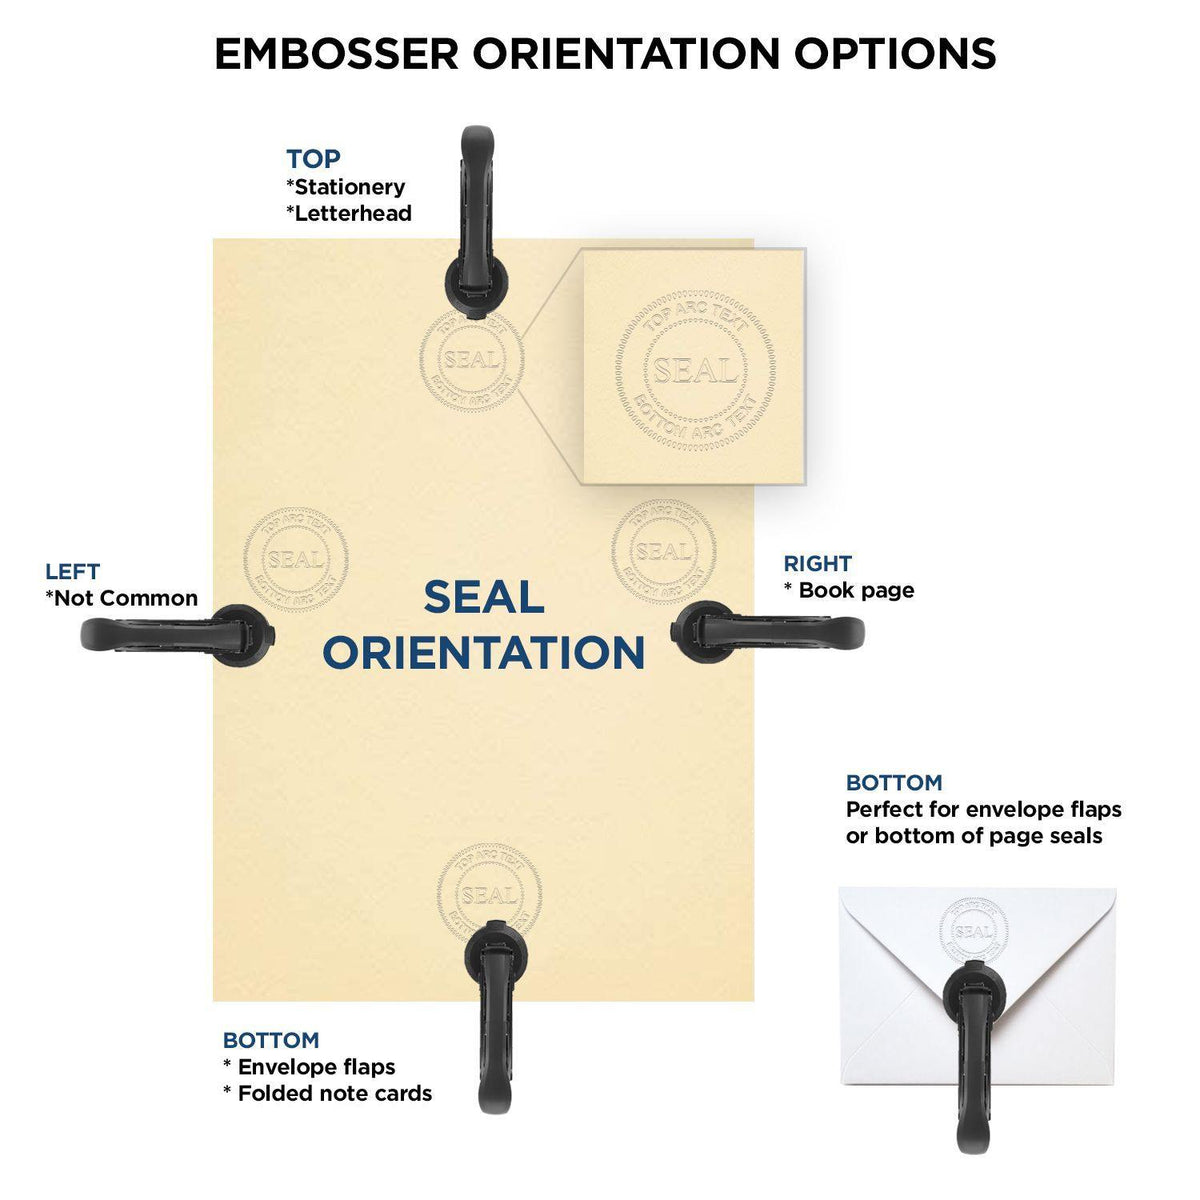 Professional Handheld Soft Seal Embosser - Engineer Seal Stamps - Embosser Type_Handheld, Embosser Type_Soft Seal, Type of Use_Professional